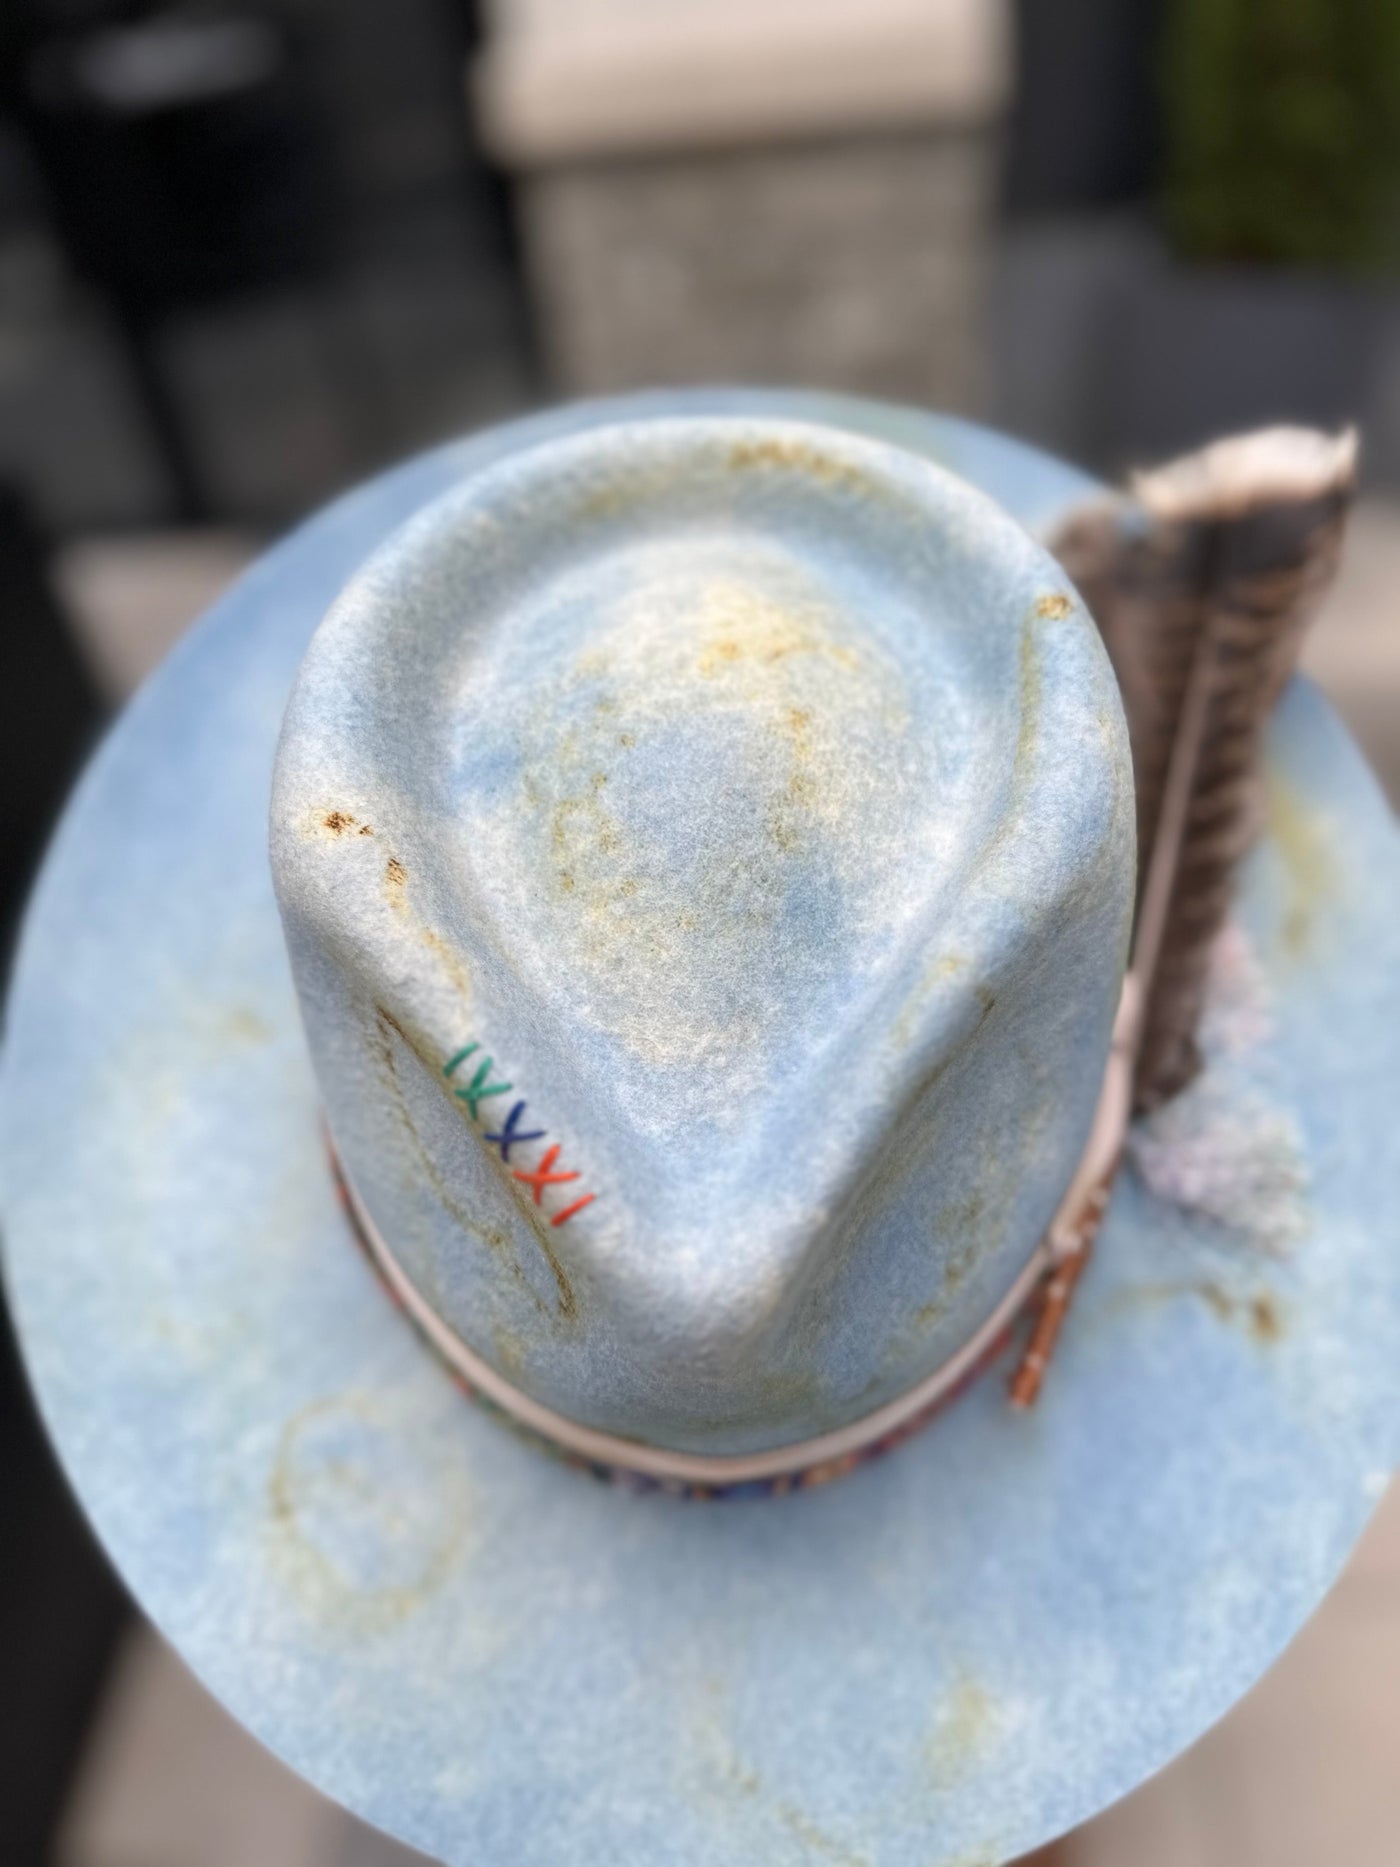 Dallas | Luxury Hat